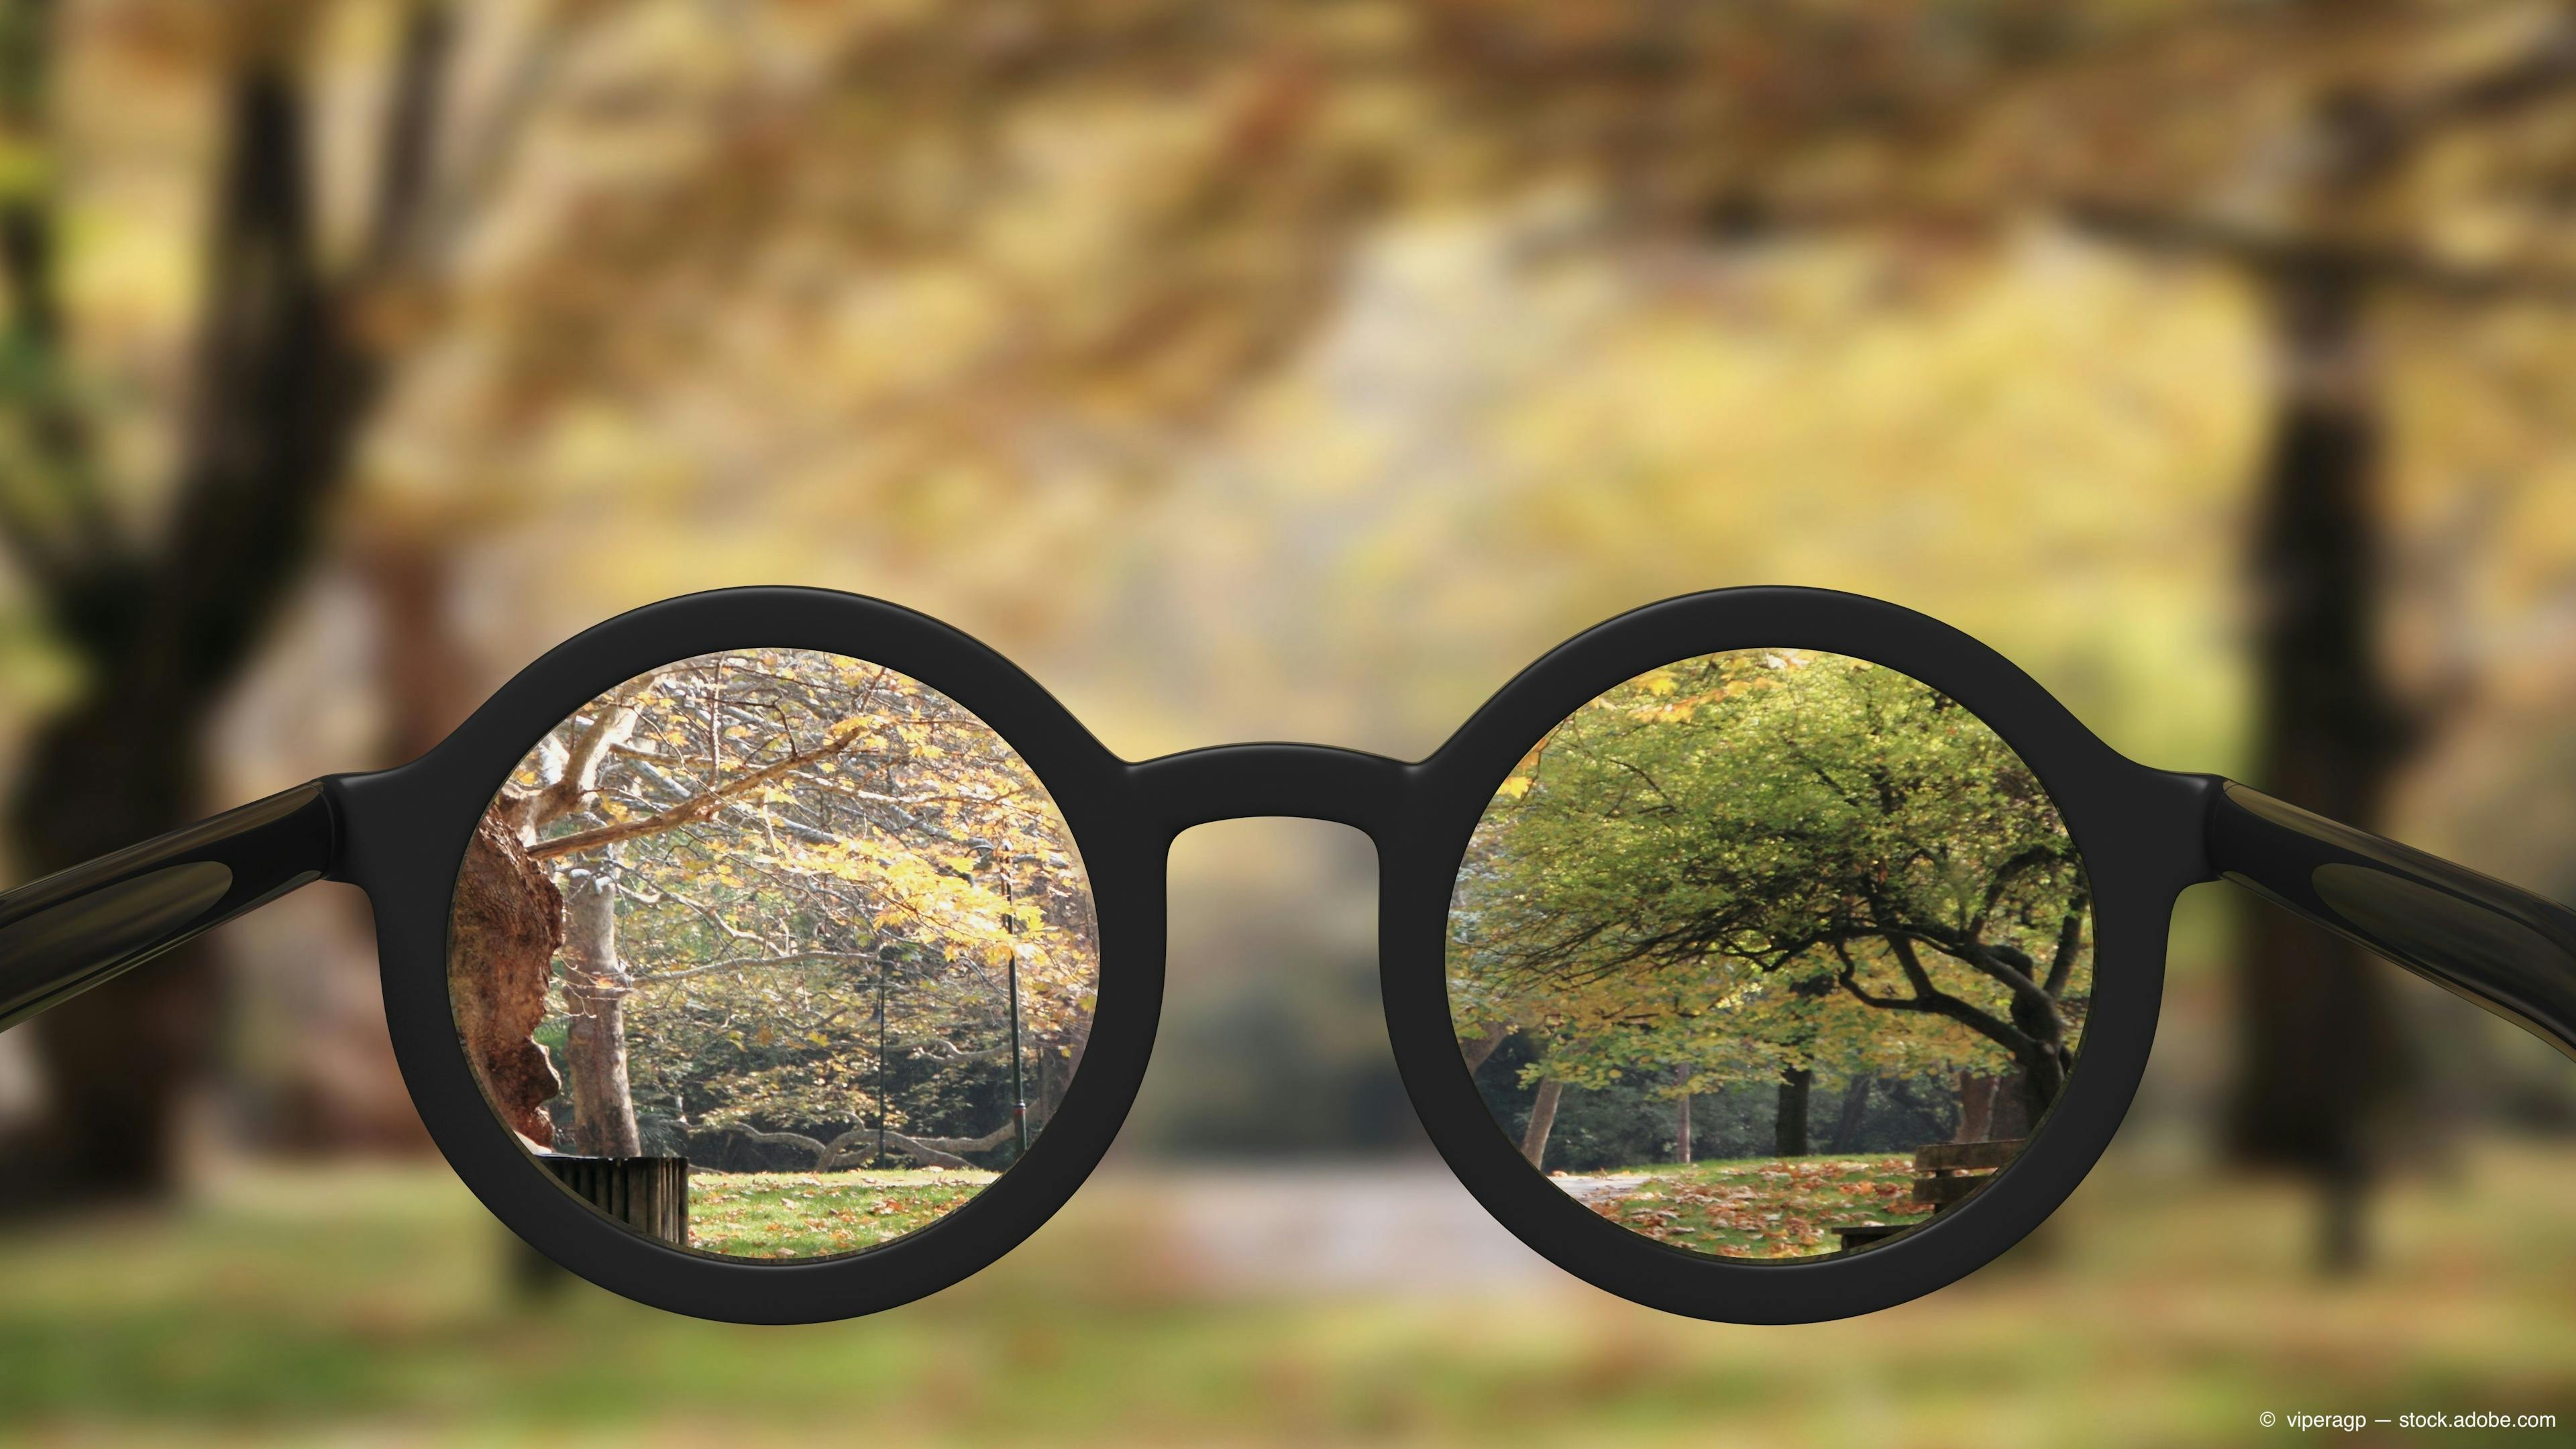 AAO 2020: Myopia progression slowed with multifocal and orthokeratology lenses 